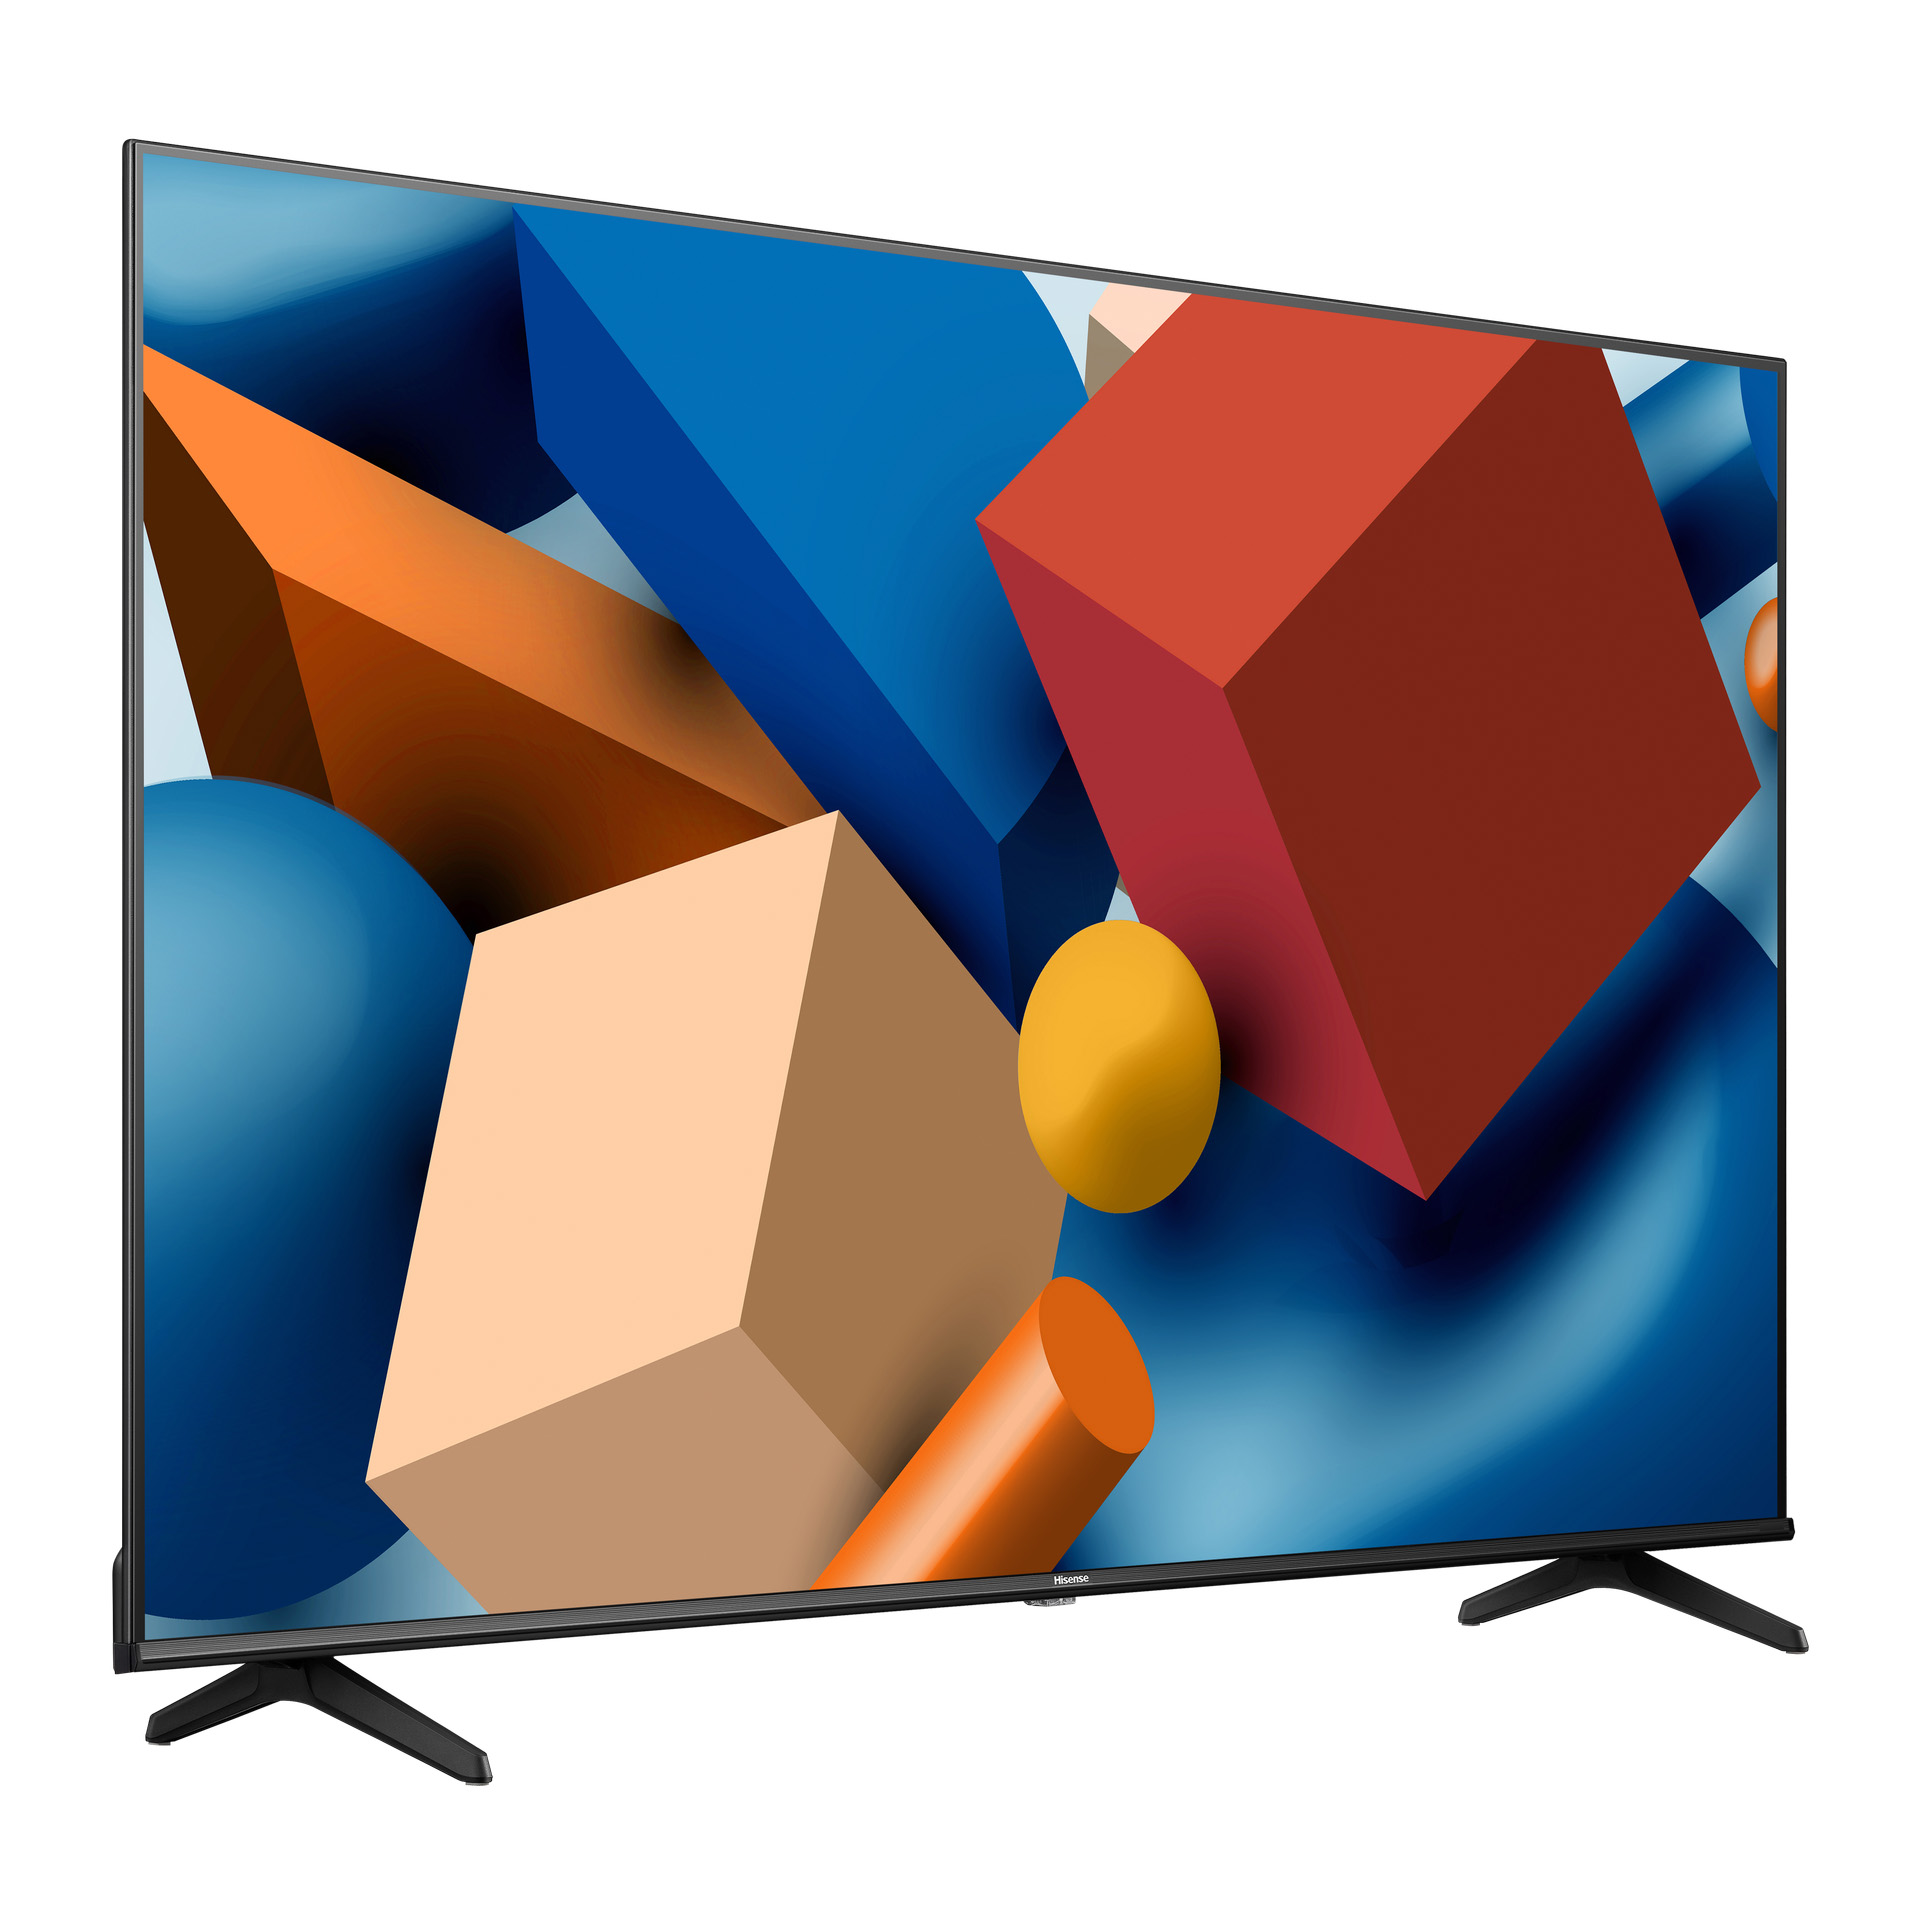 Hisense TV 55A6K - UHD 4K, Smart TV de 55 Pulgadas, Dolby Vision